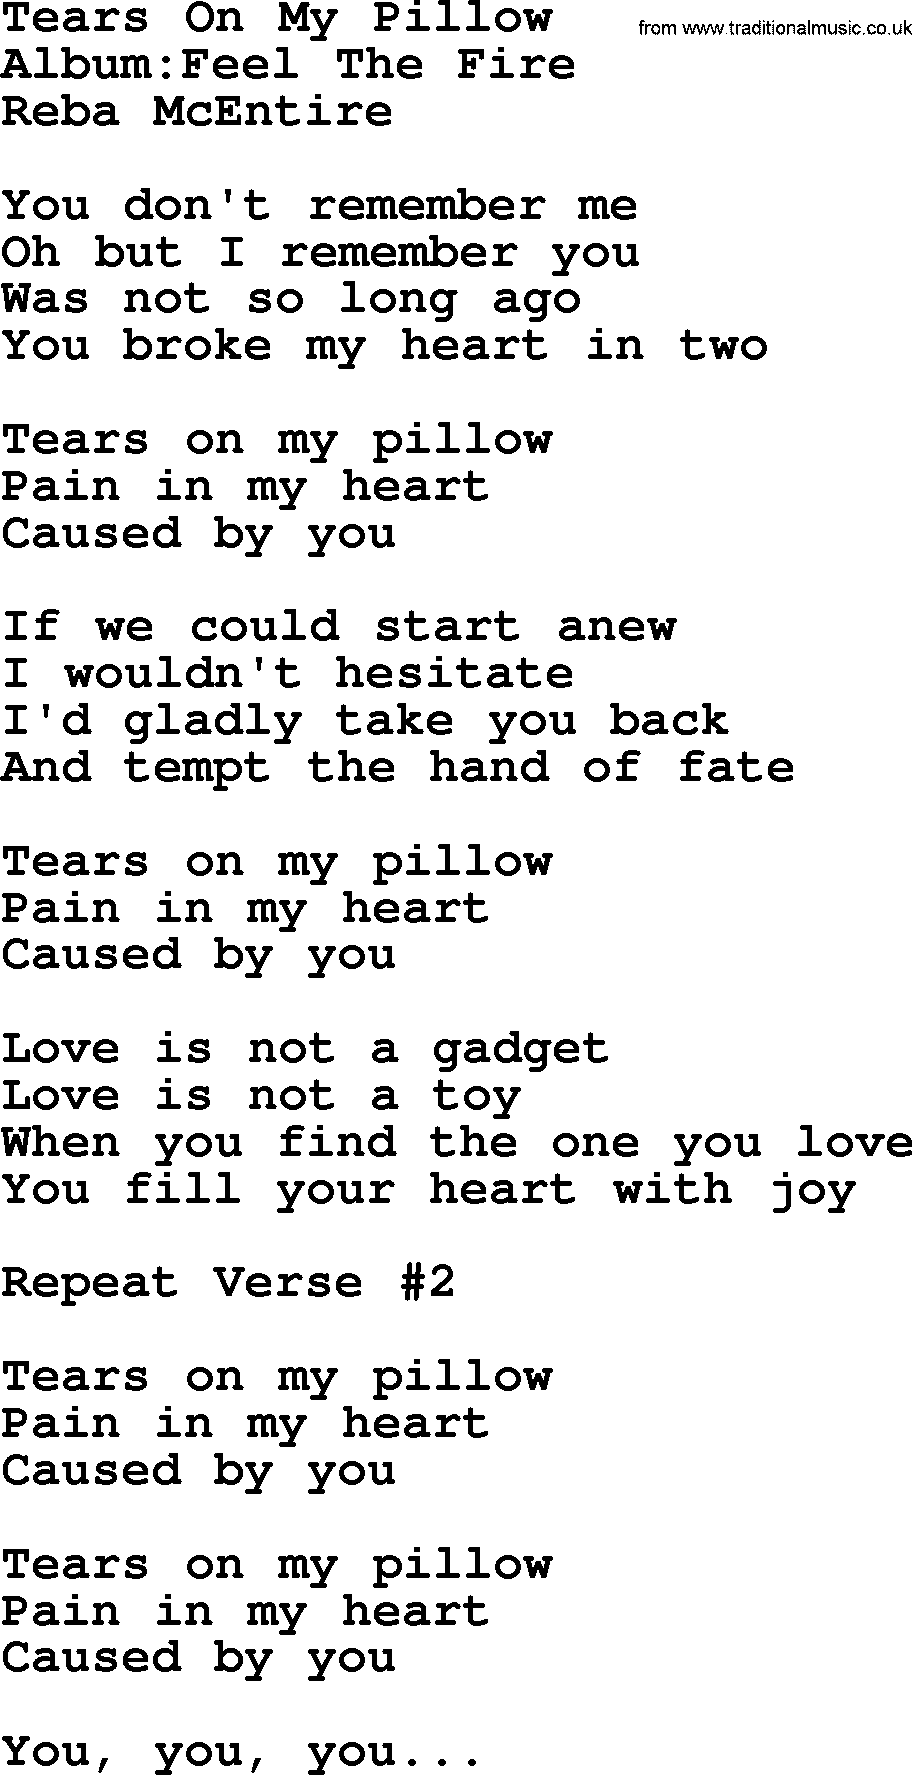 Reba McEntire song: Tears On My Pillow lyrics